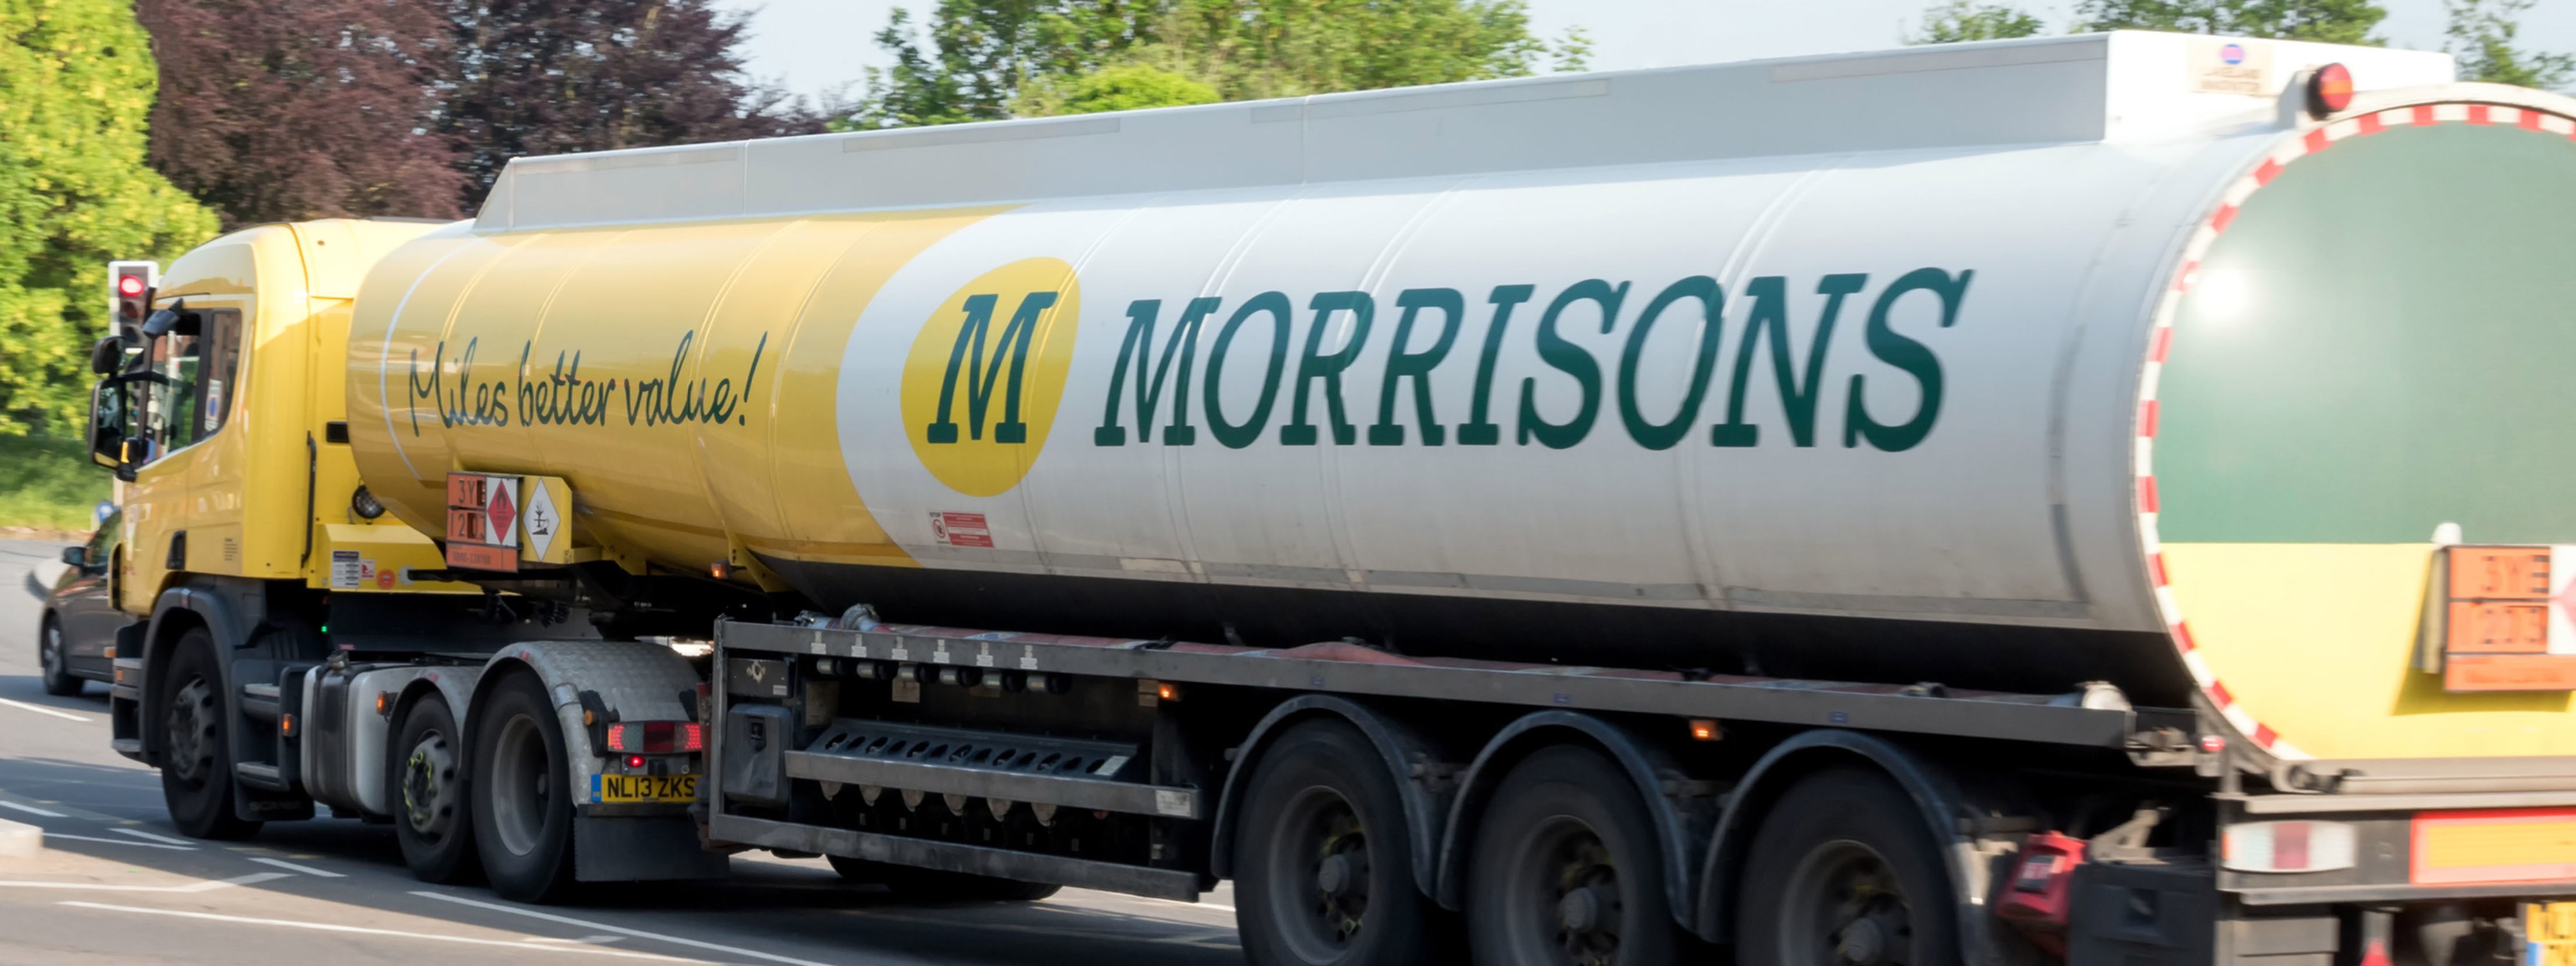 Morrisons truck.